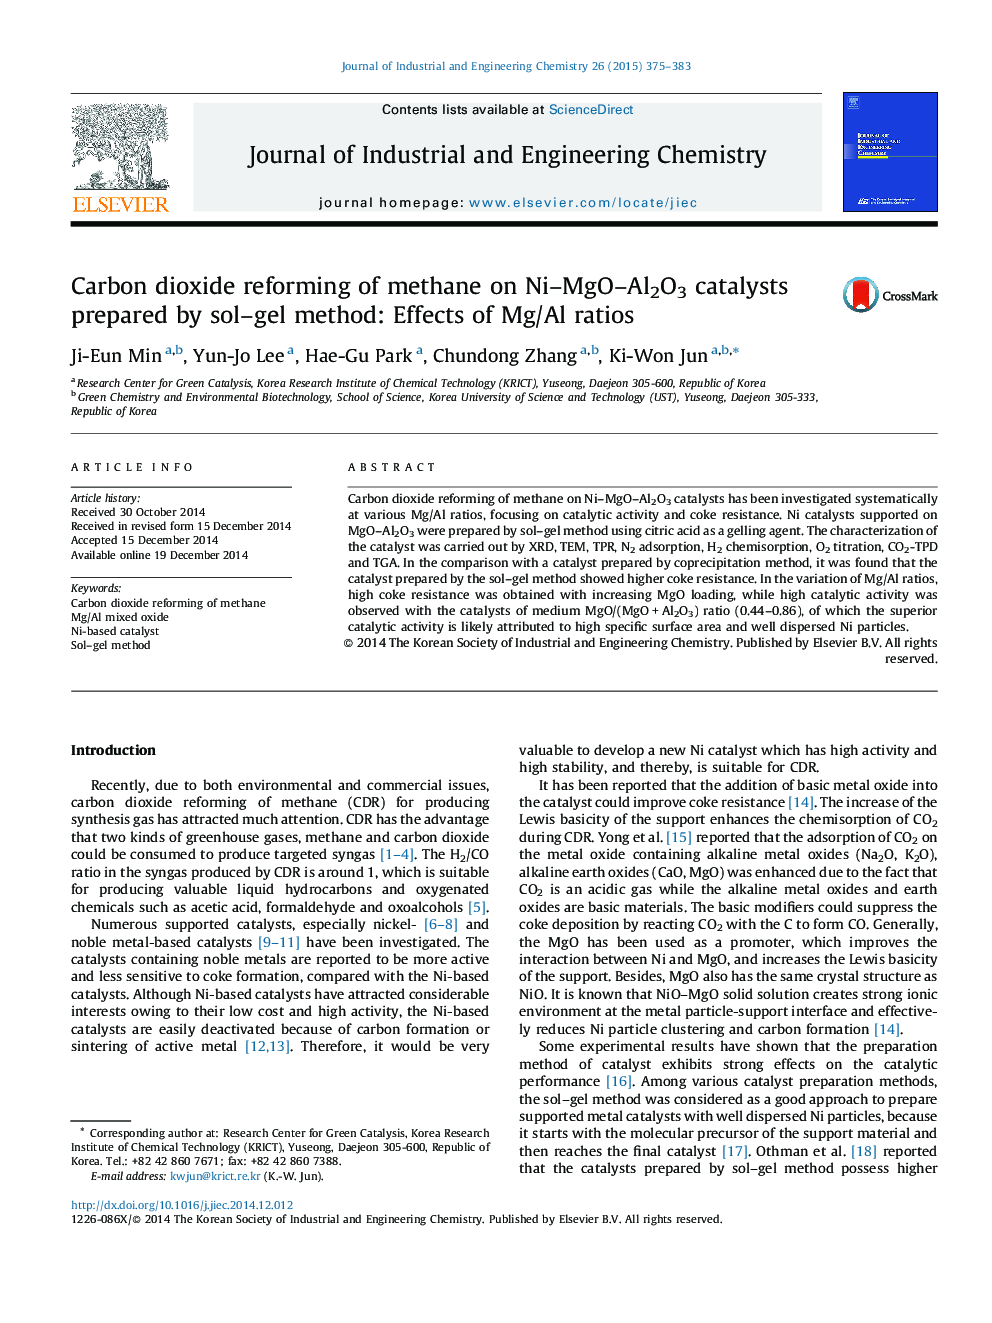 Carbon dioxide reforming of methane on Ni–MgO–Al2O3 catalysts prepared by sol–gel method: Effects of Mg/Al ratios